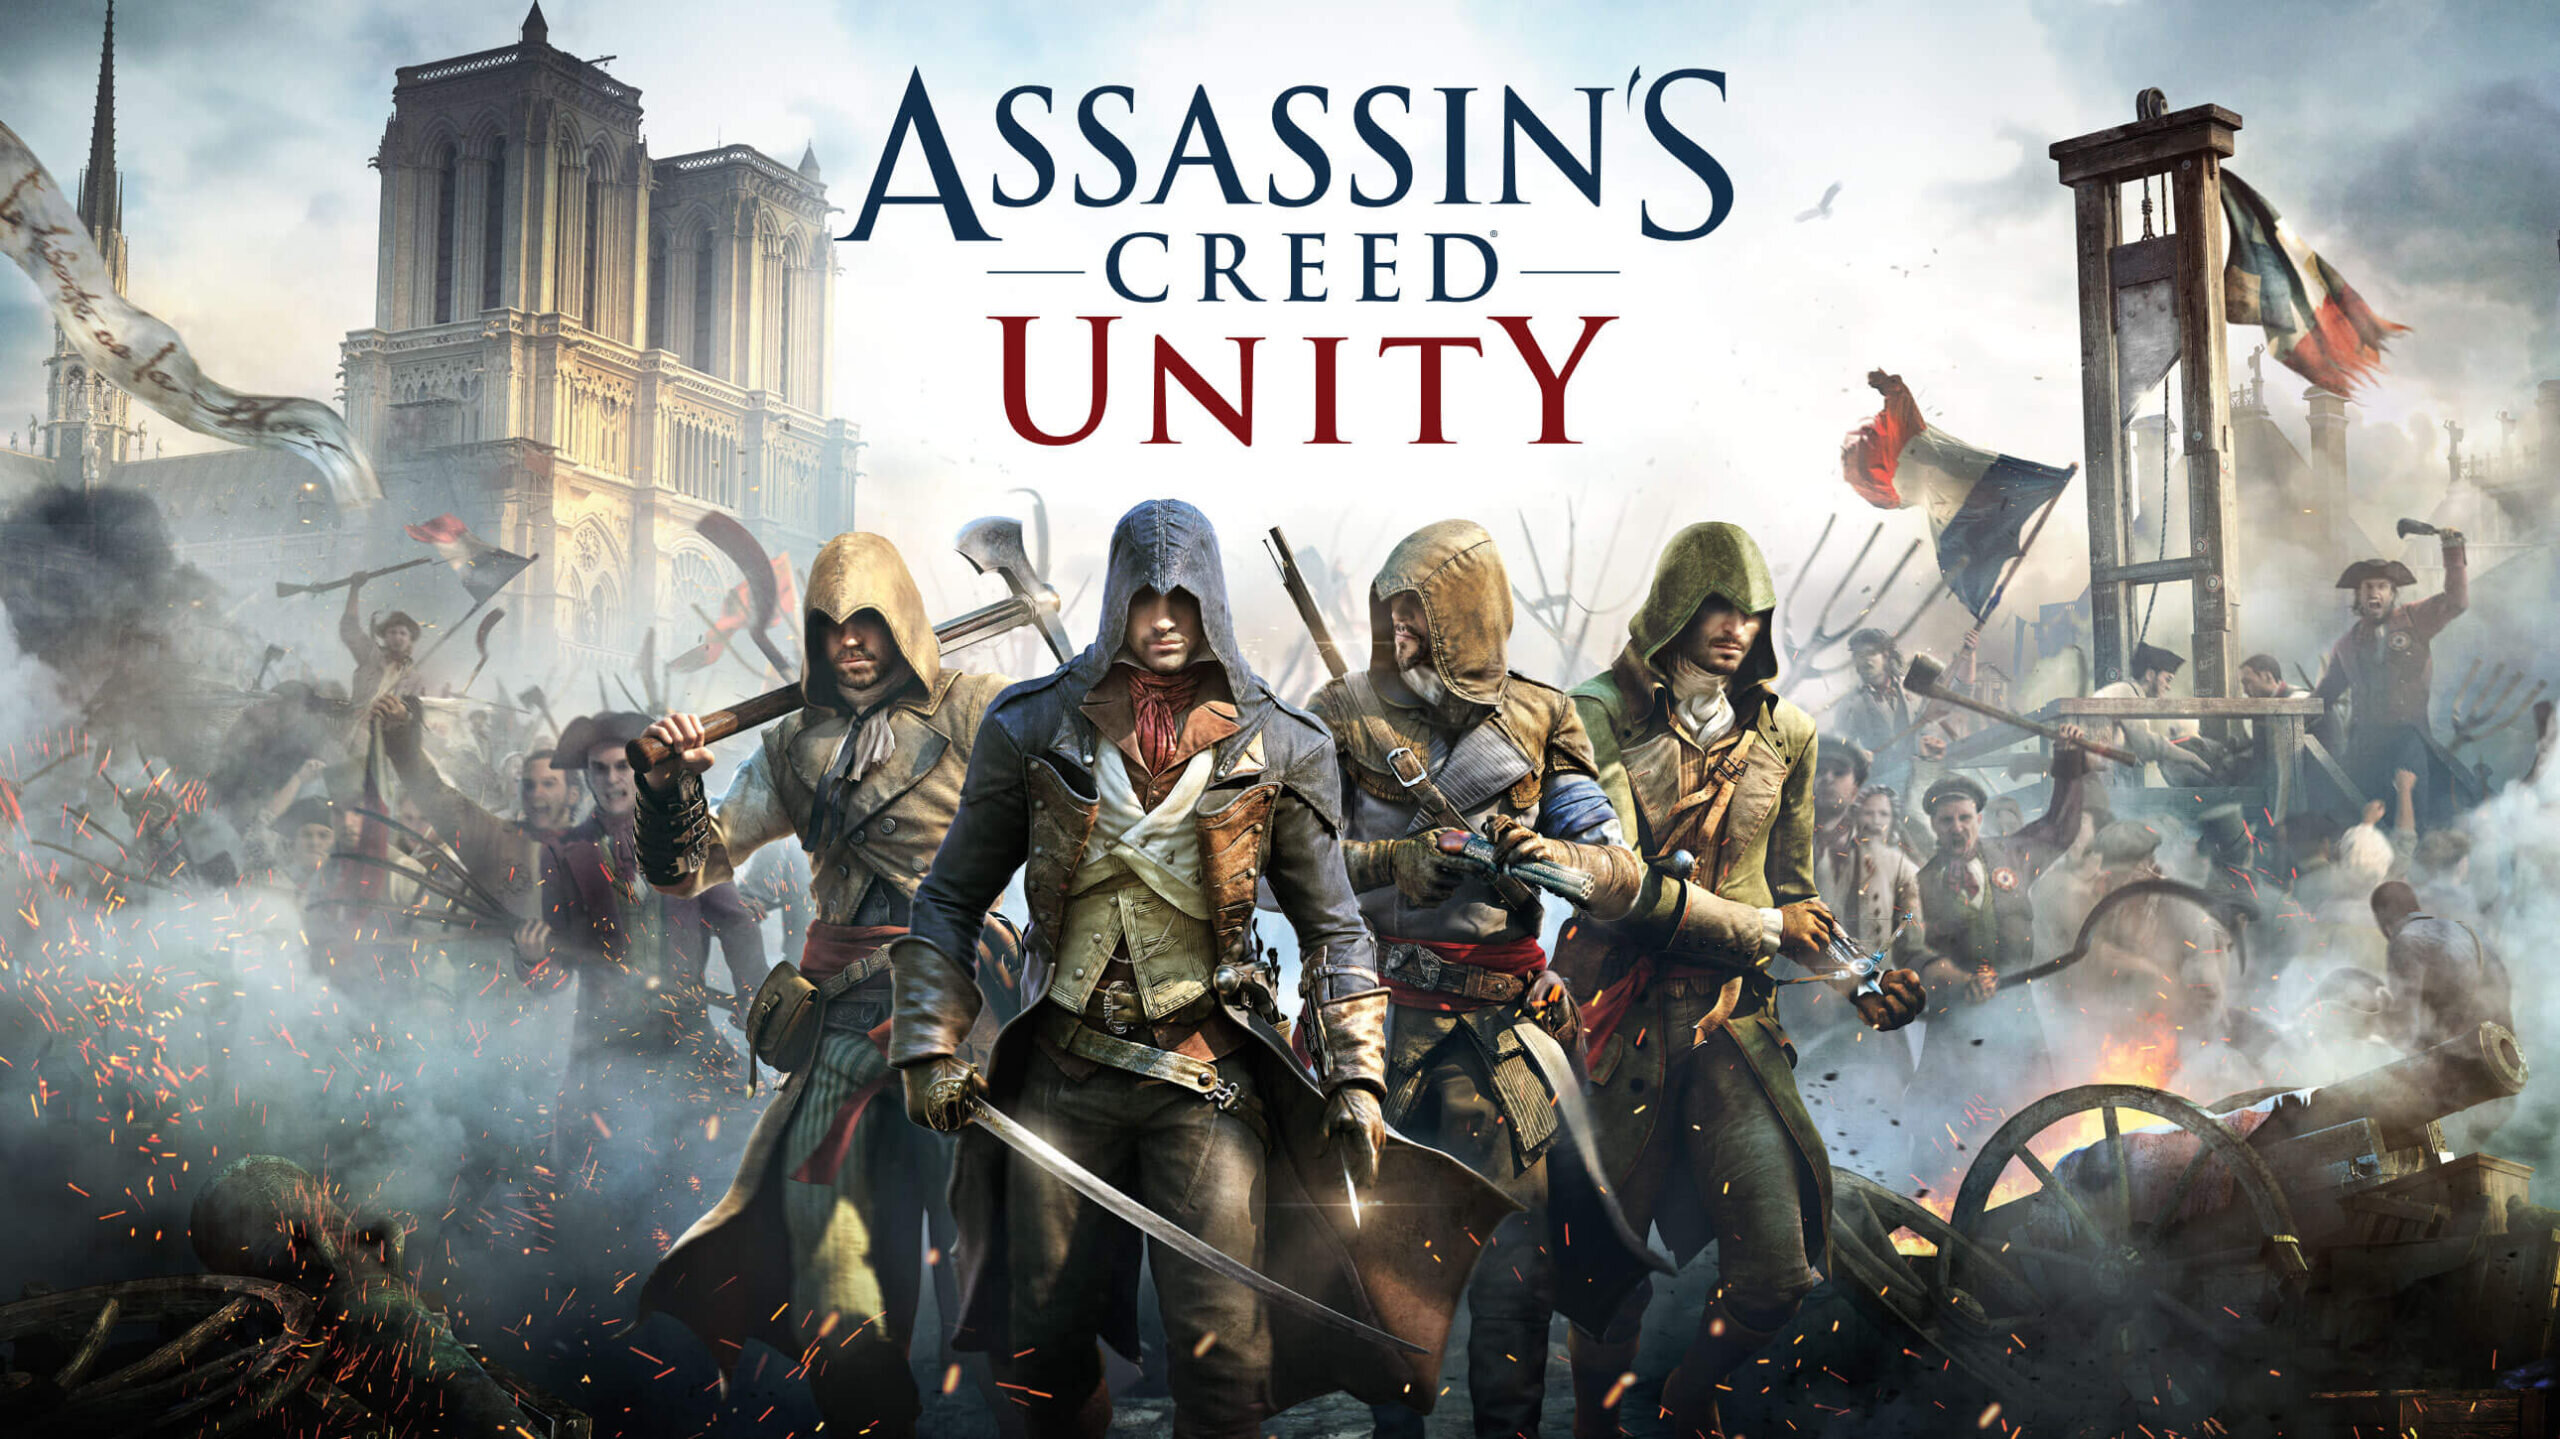 Giới thiệu về game Assassin’s Creed Unity 